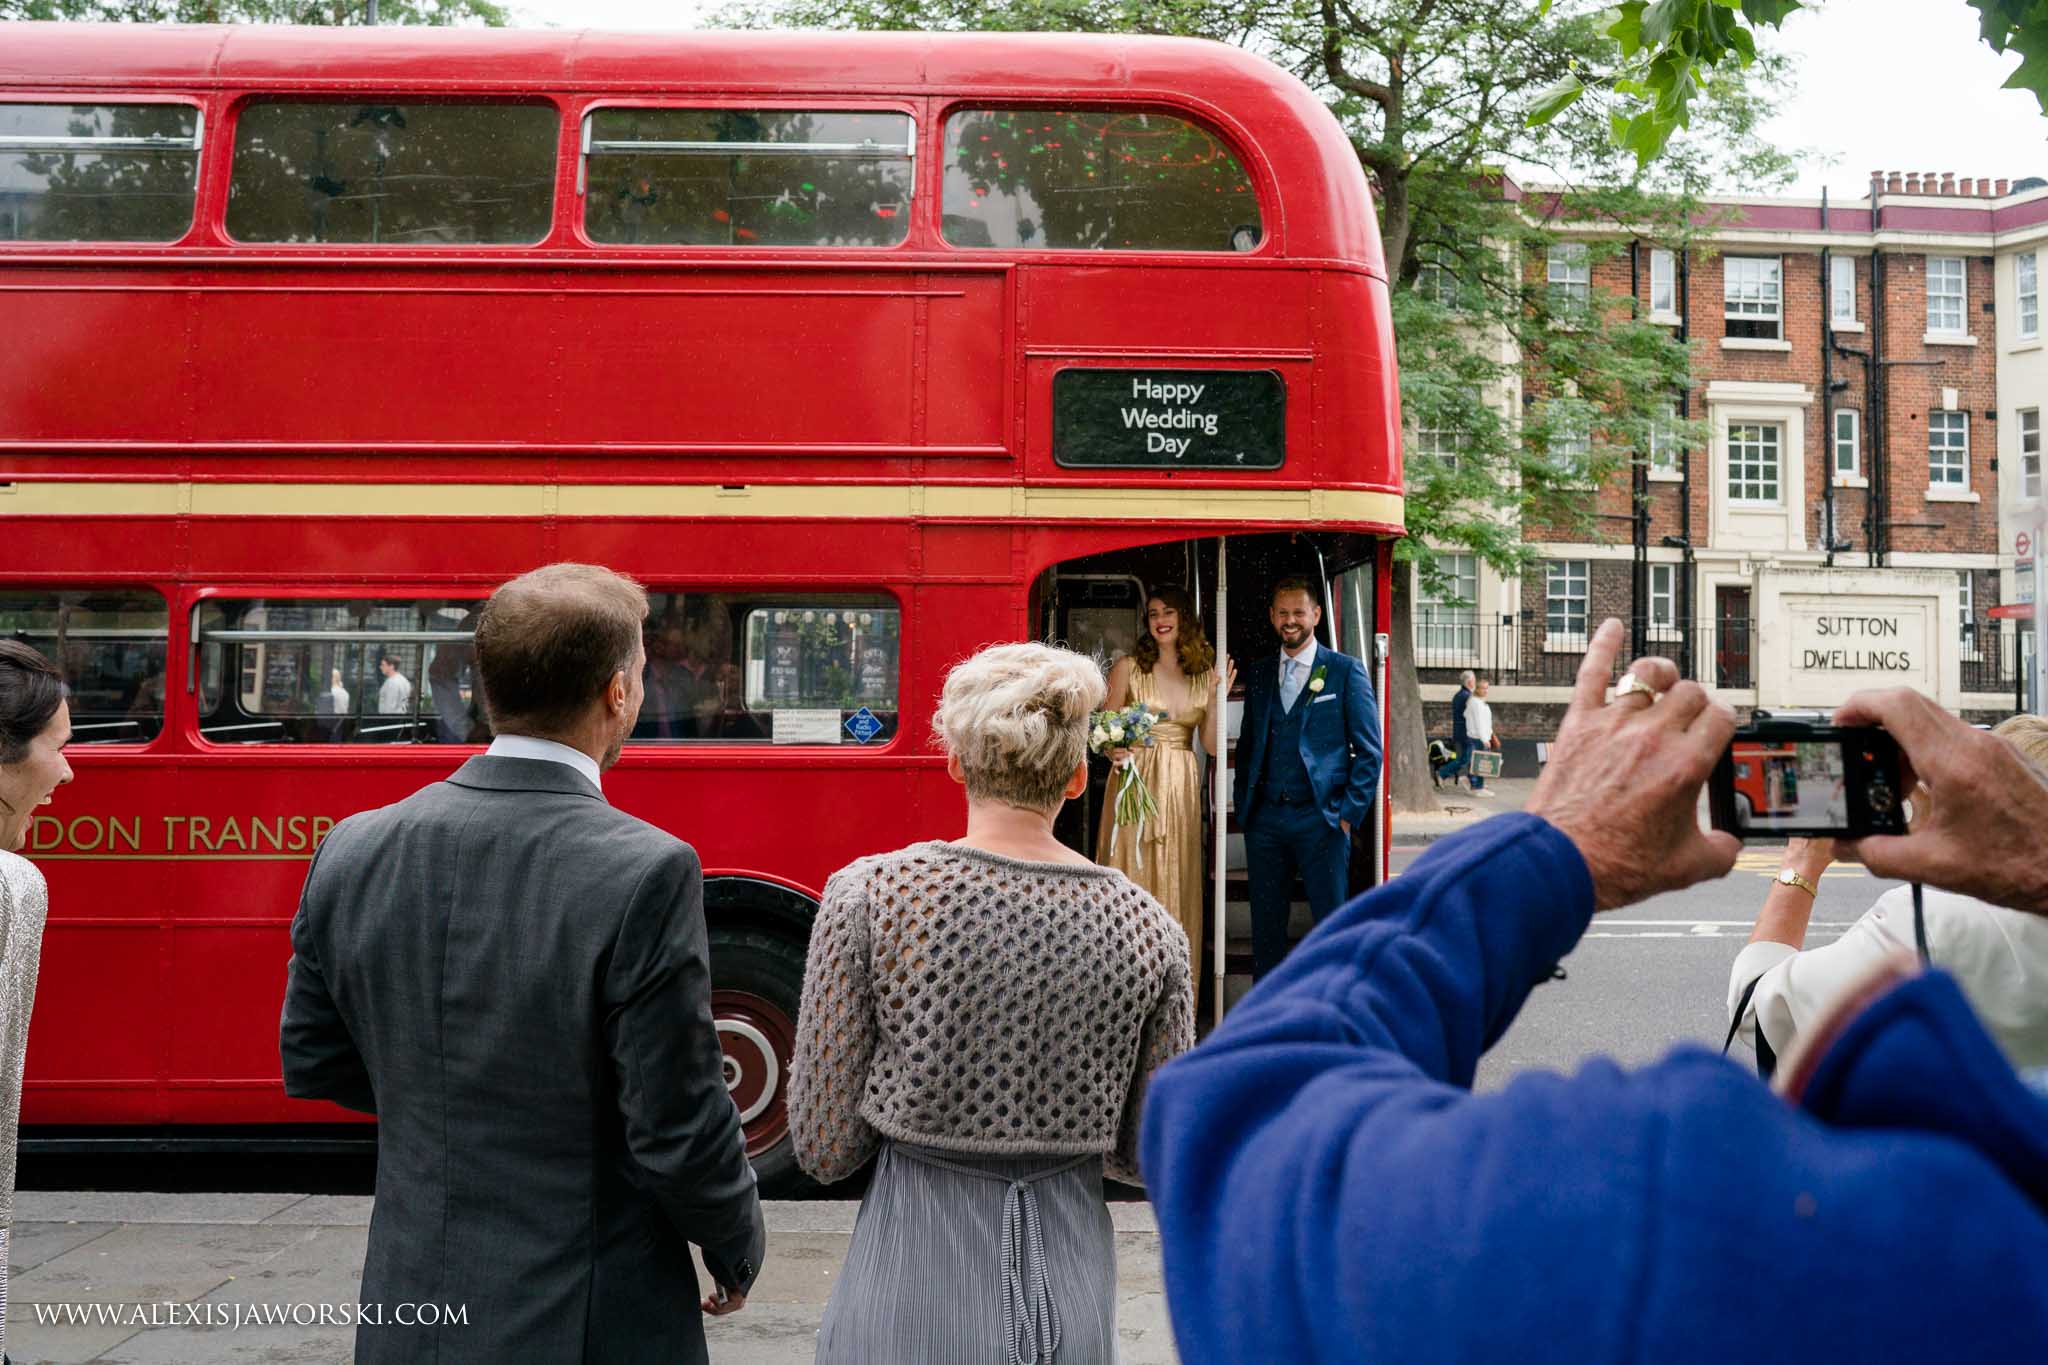 The wedding bus